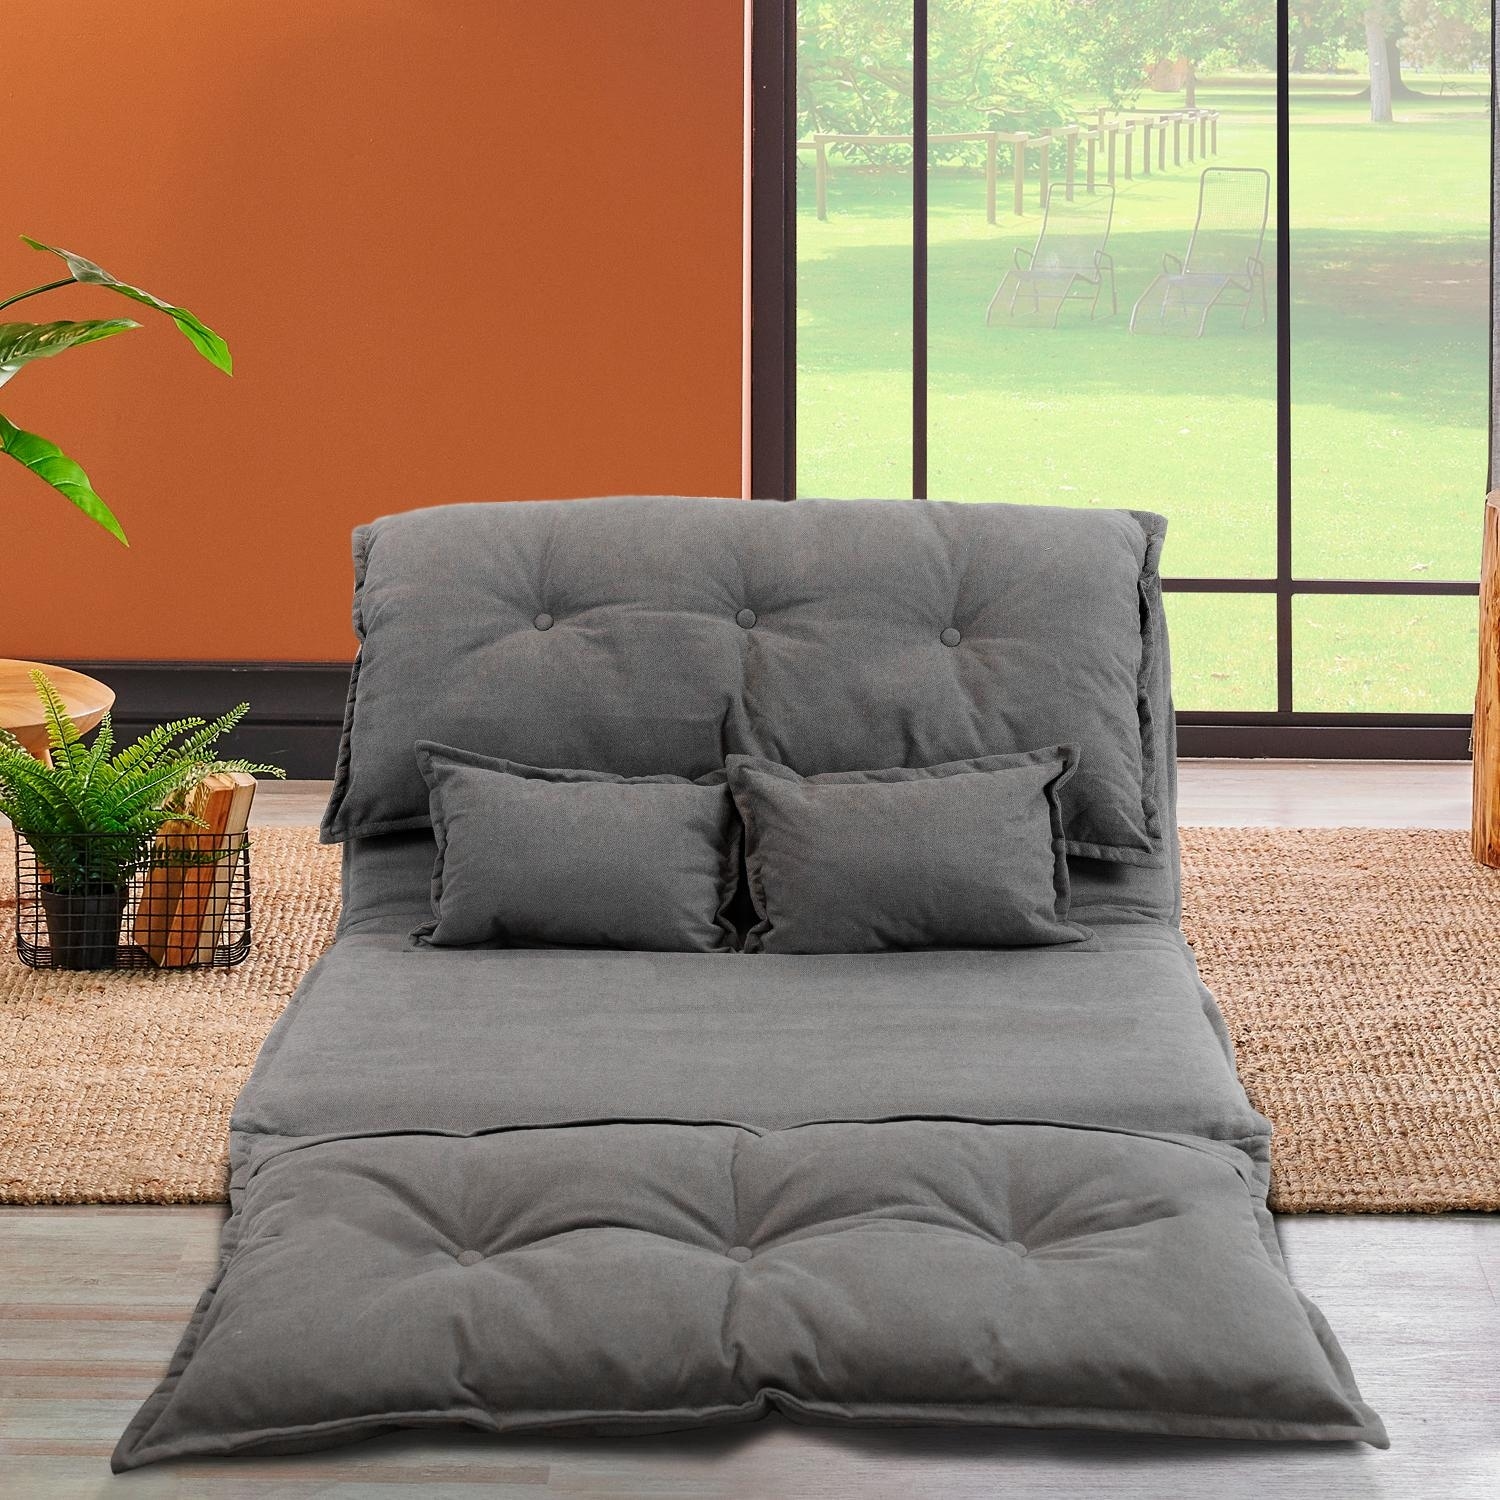 Lazy Sofa Adjustable Folding Futon Sofa Video Gaming Sofa with Two Pillows  - Bed Bath & Beyond - 36193249